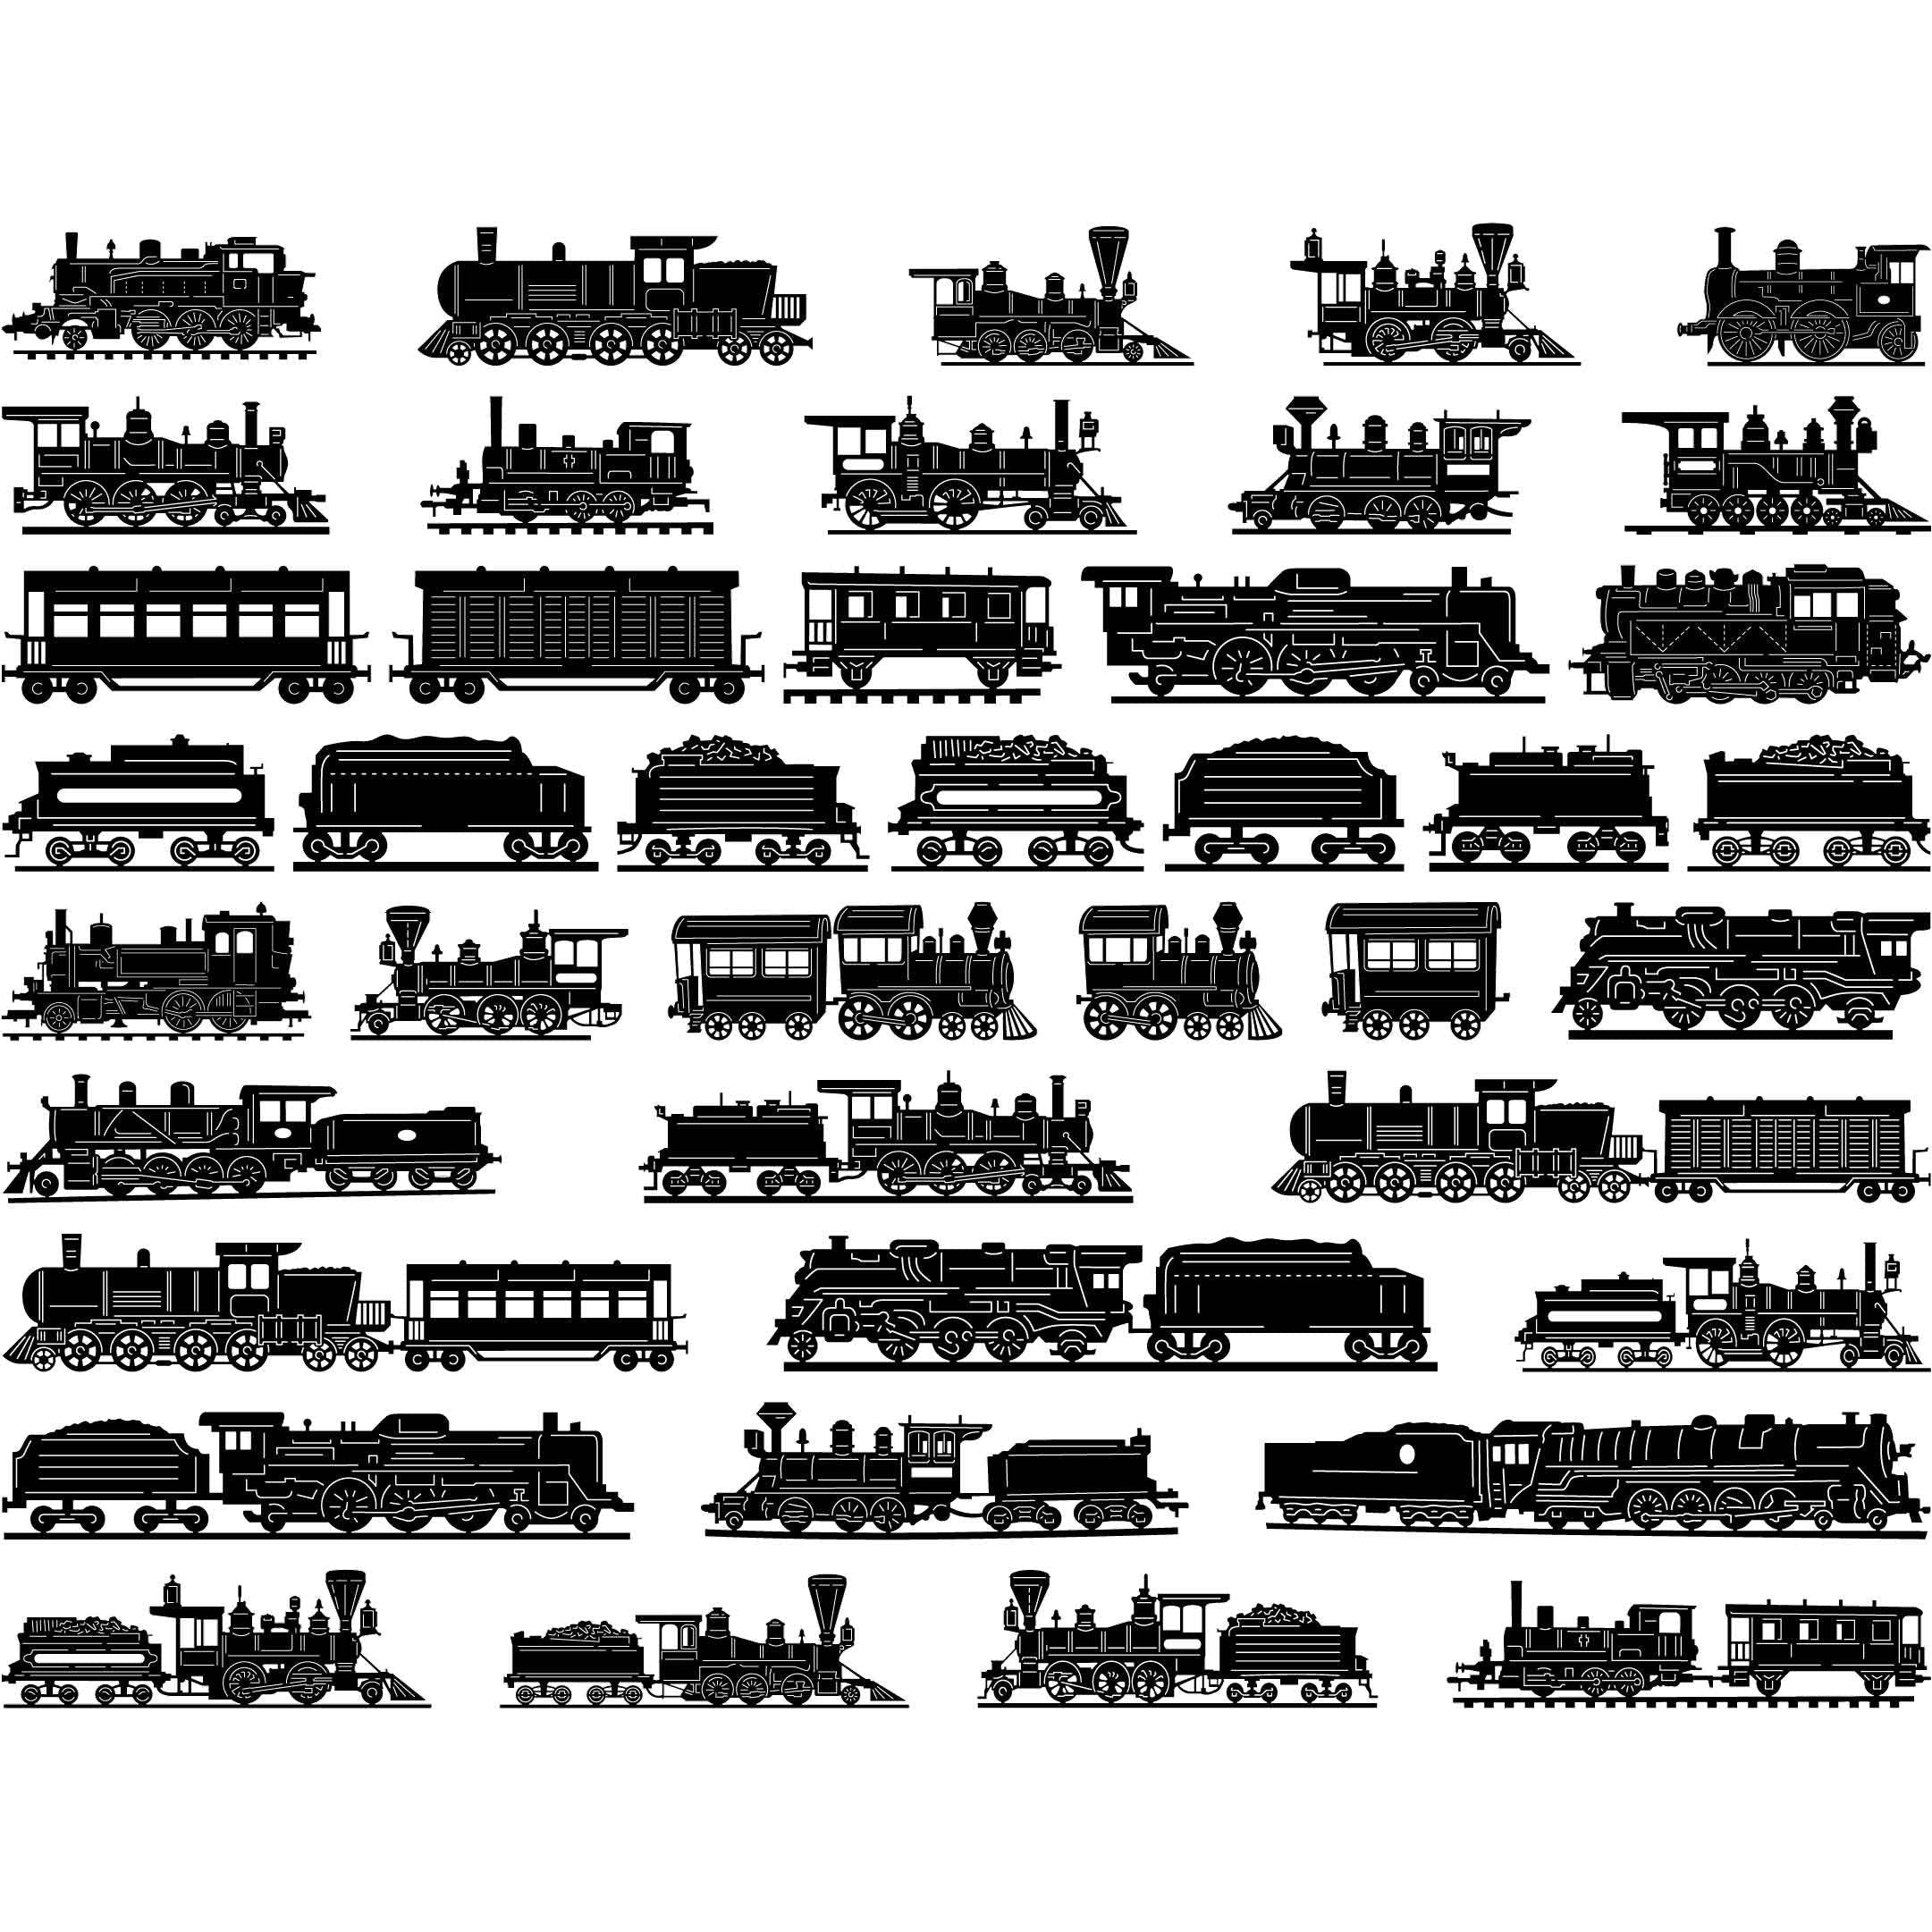 Antique Steam Locomotive Trains and Carts-DXFforCNC.com-DXF Files cut ready cnc machines